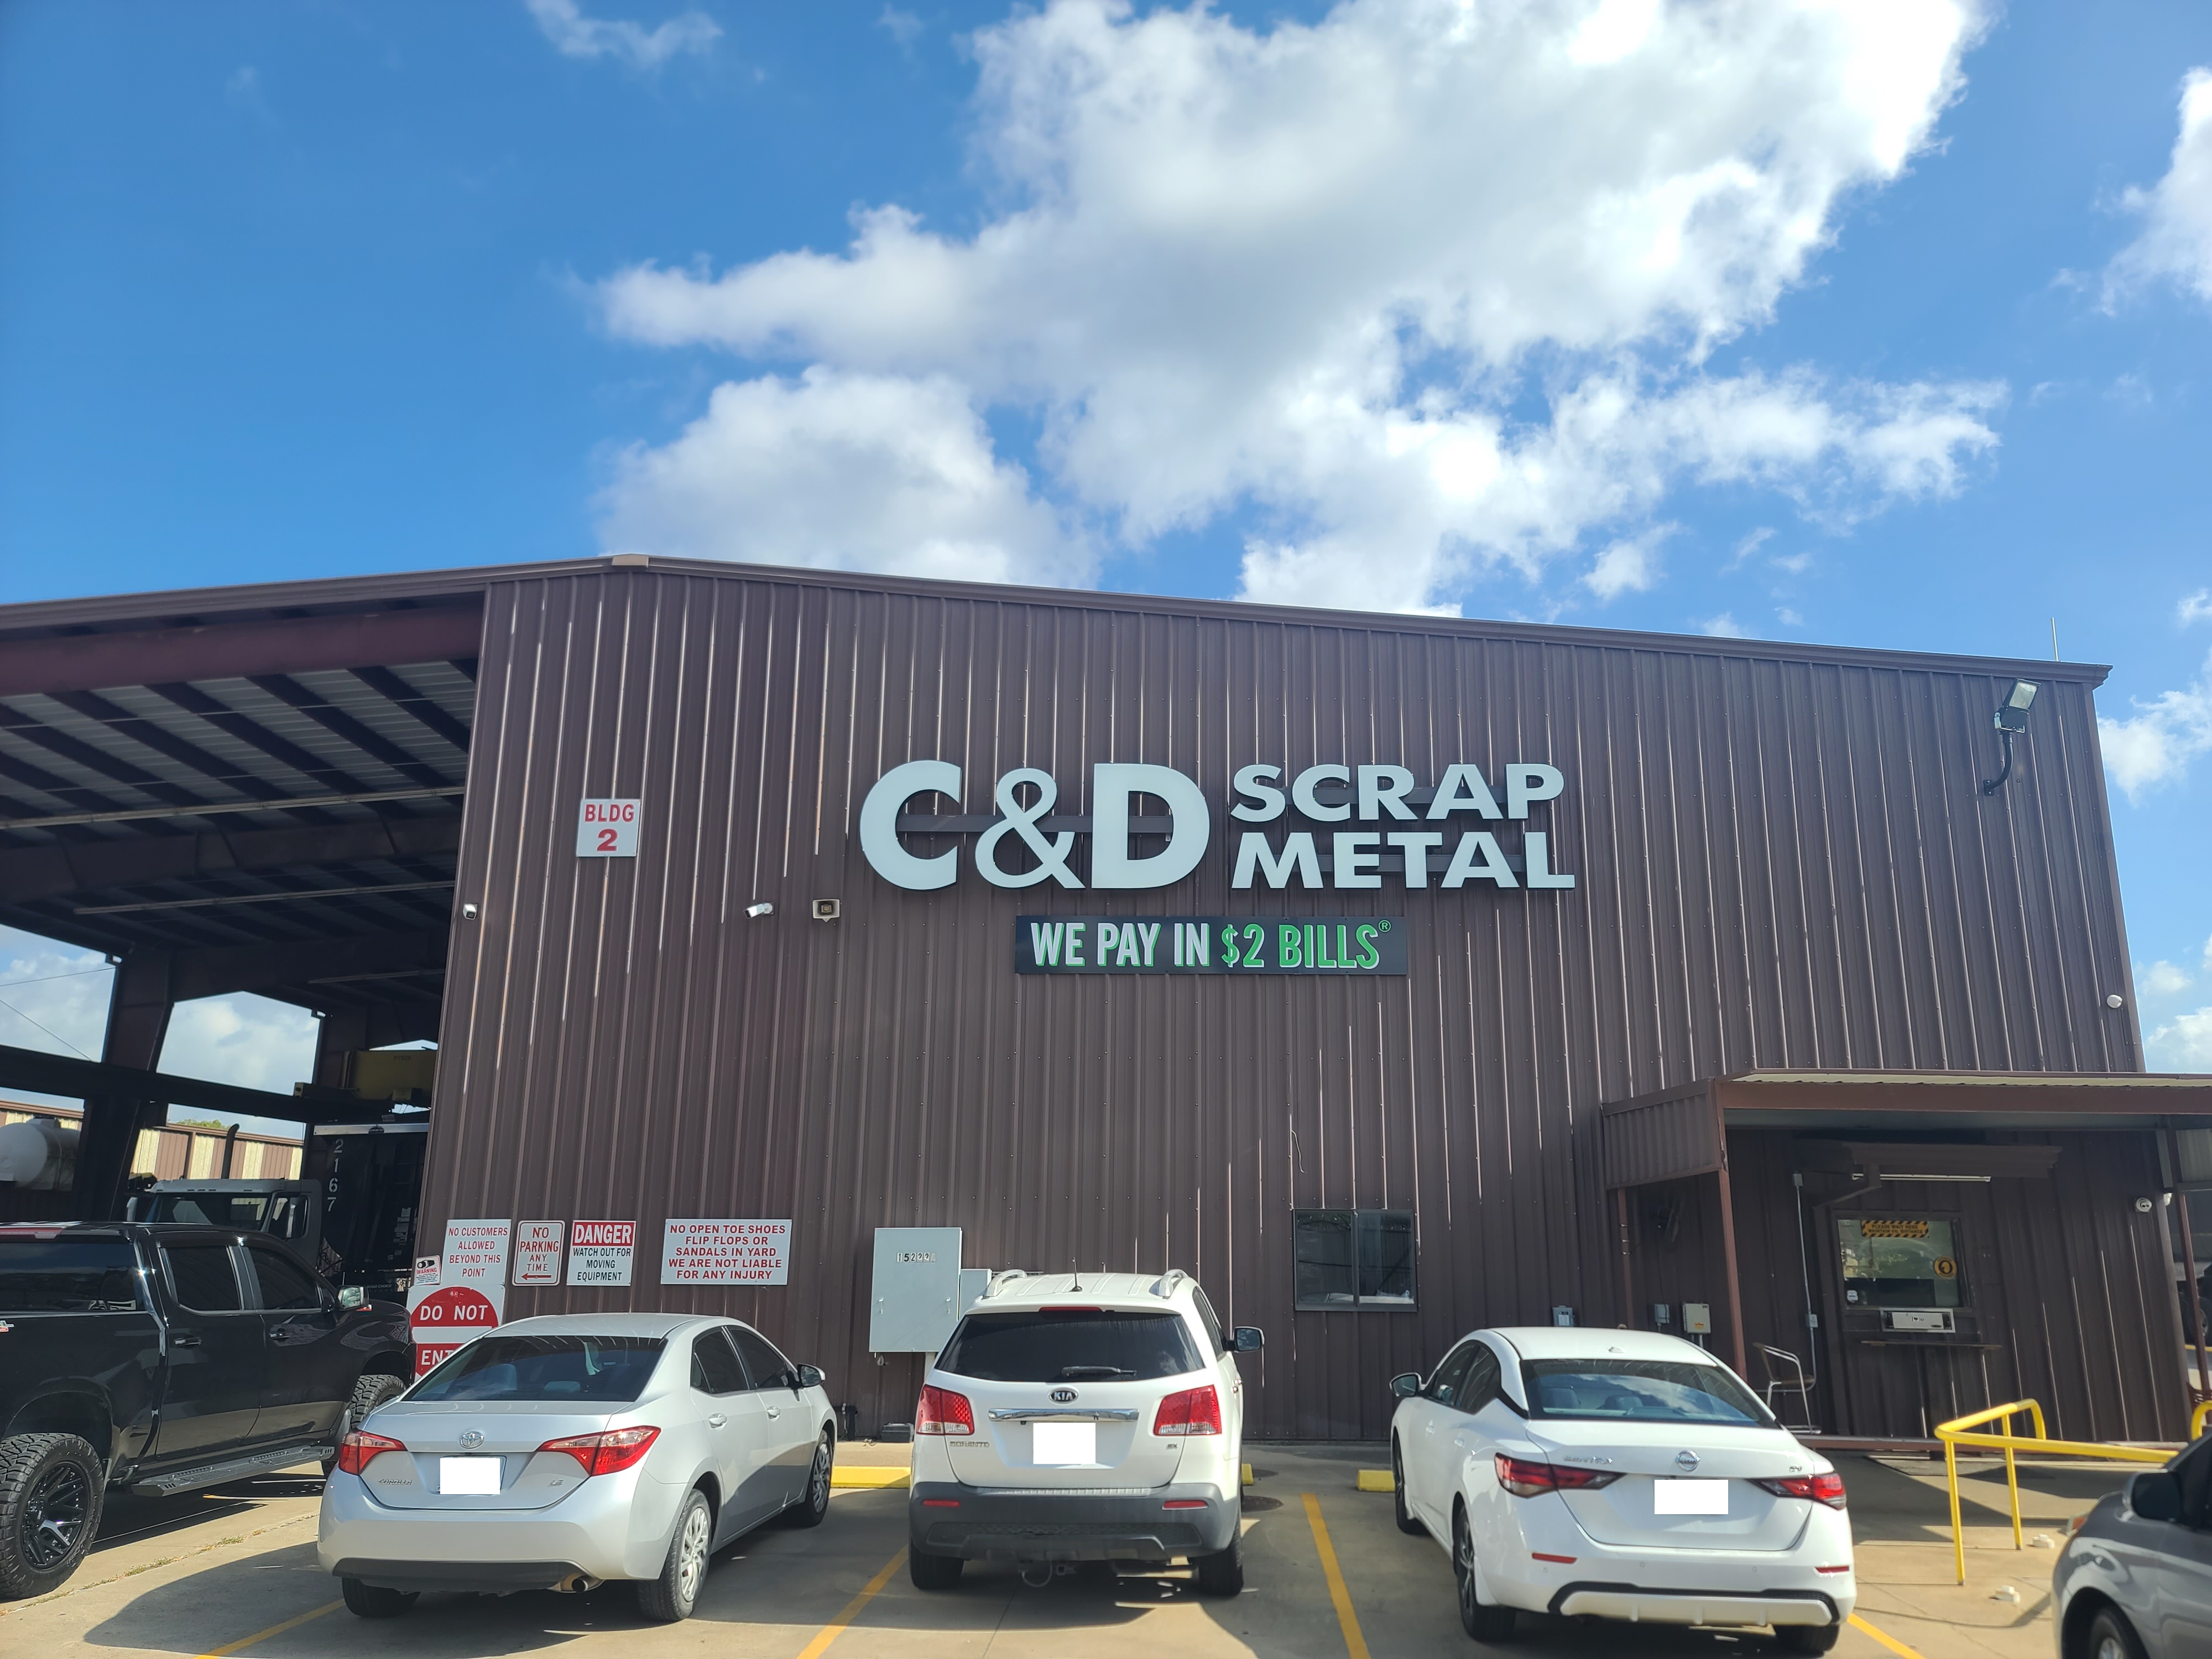 c&d scrap metal sugar land texas location exterior building